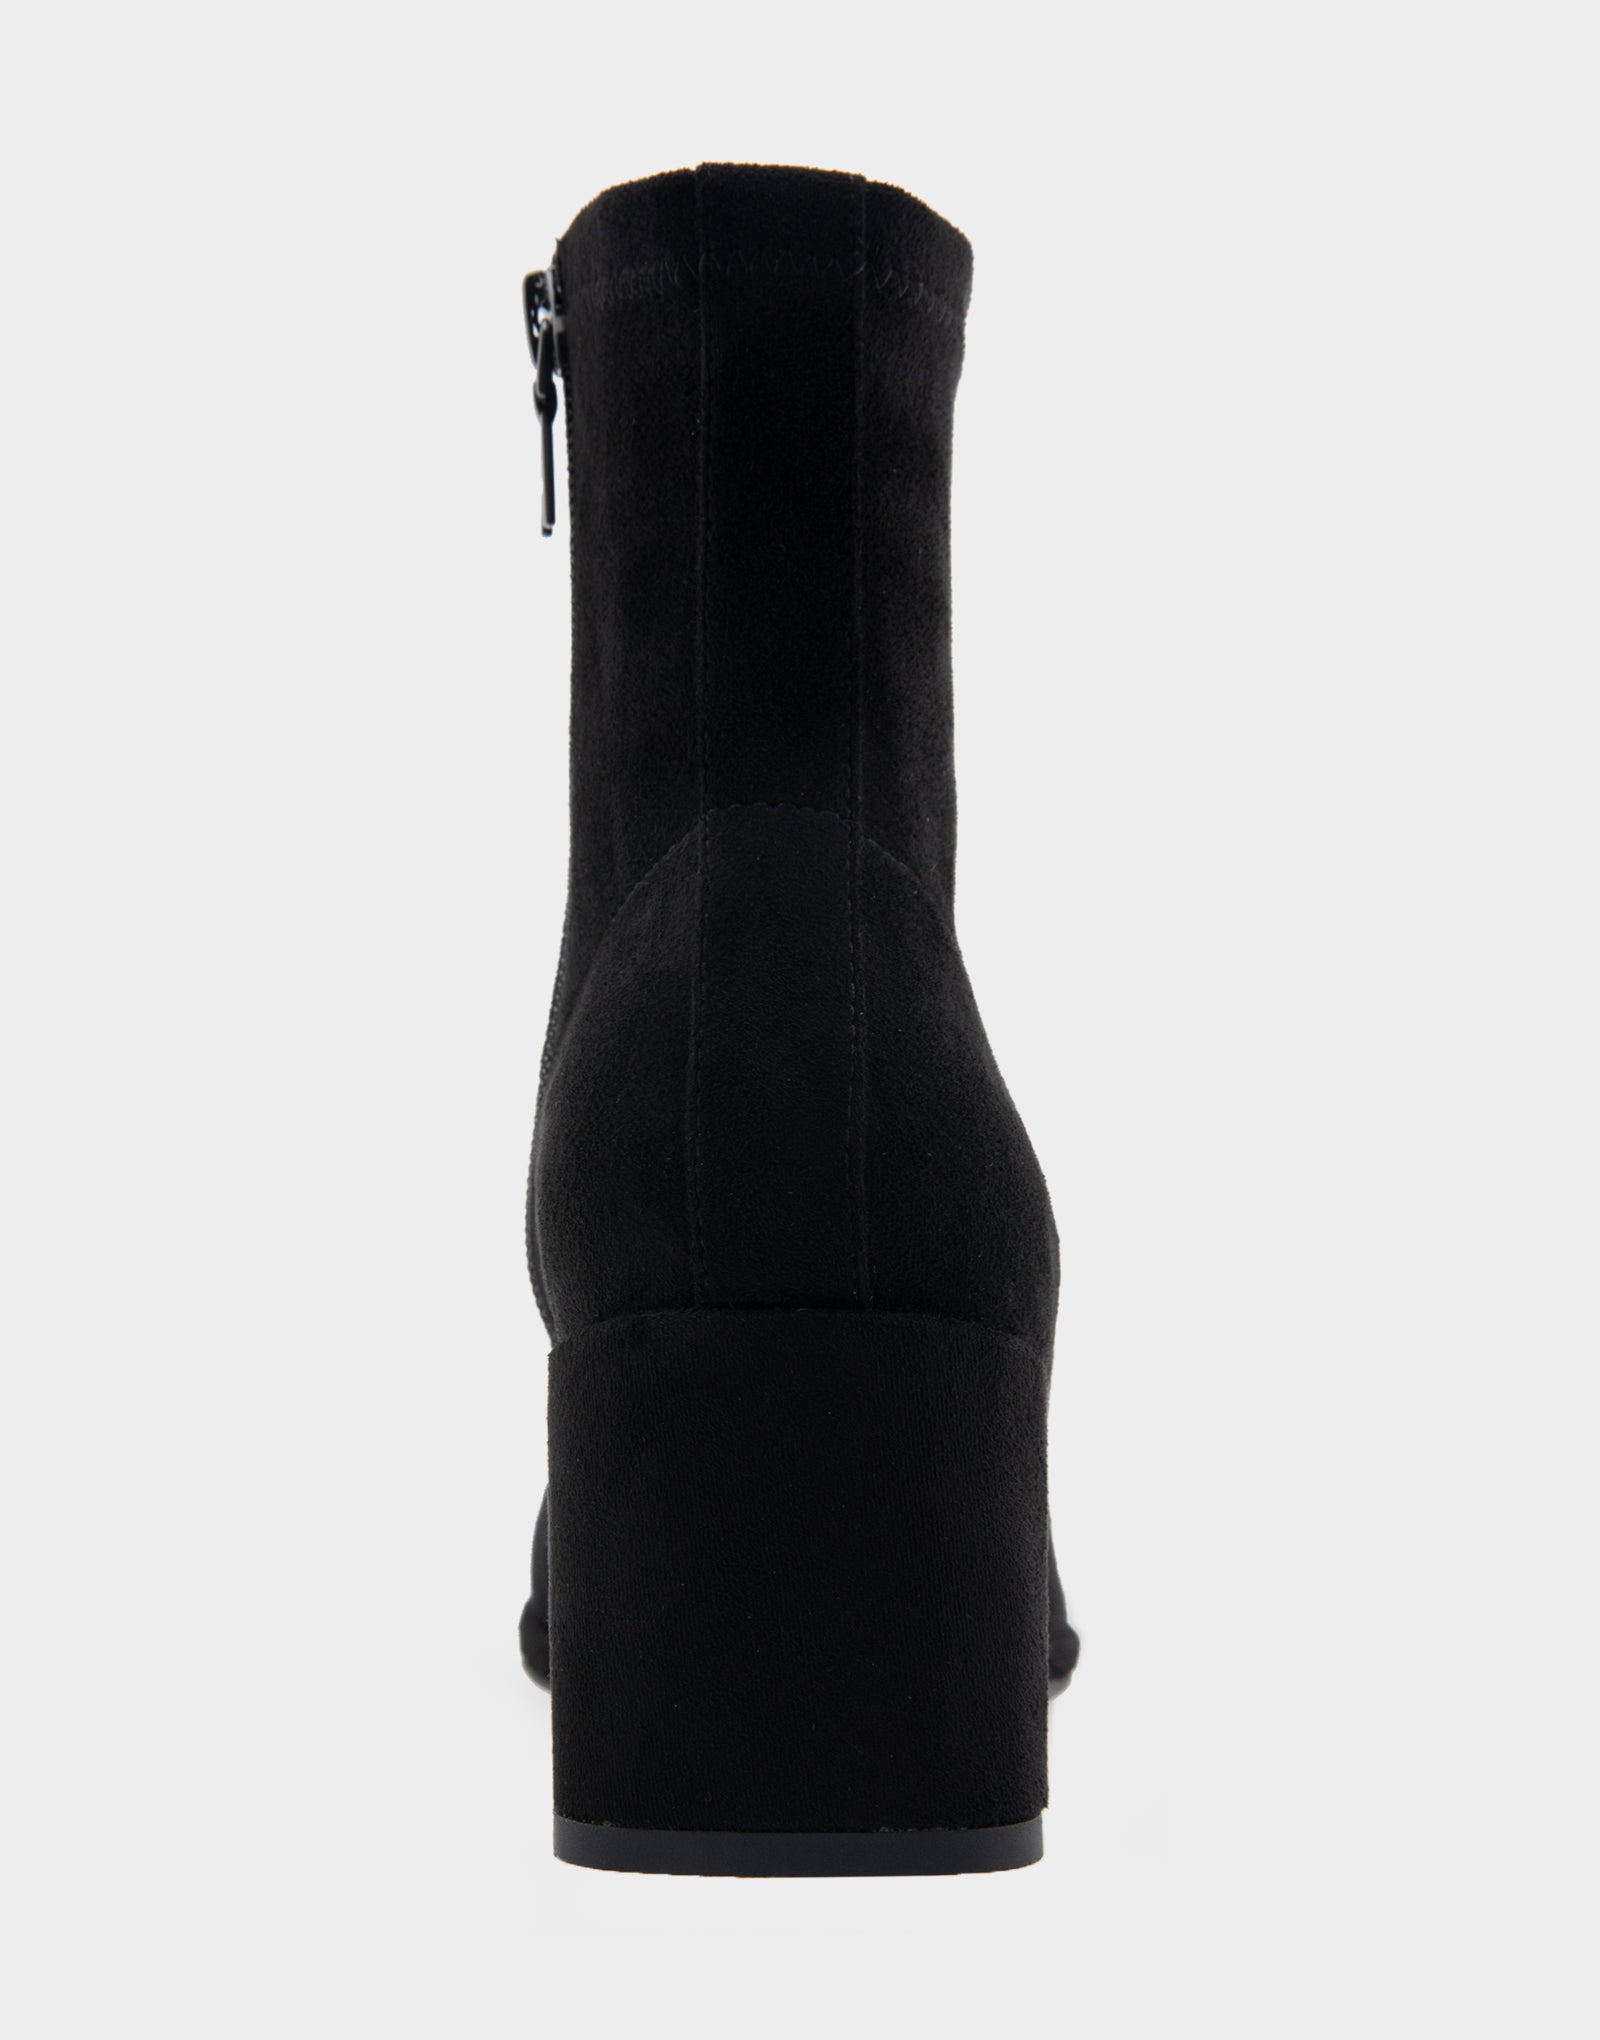 Women's Wedge Heel Ankle Boot in Black